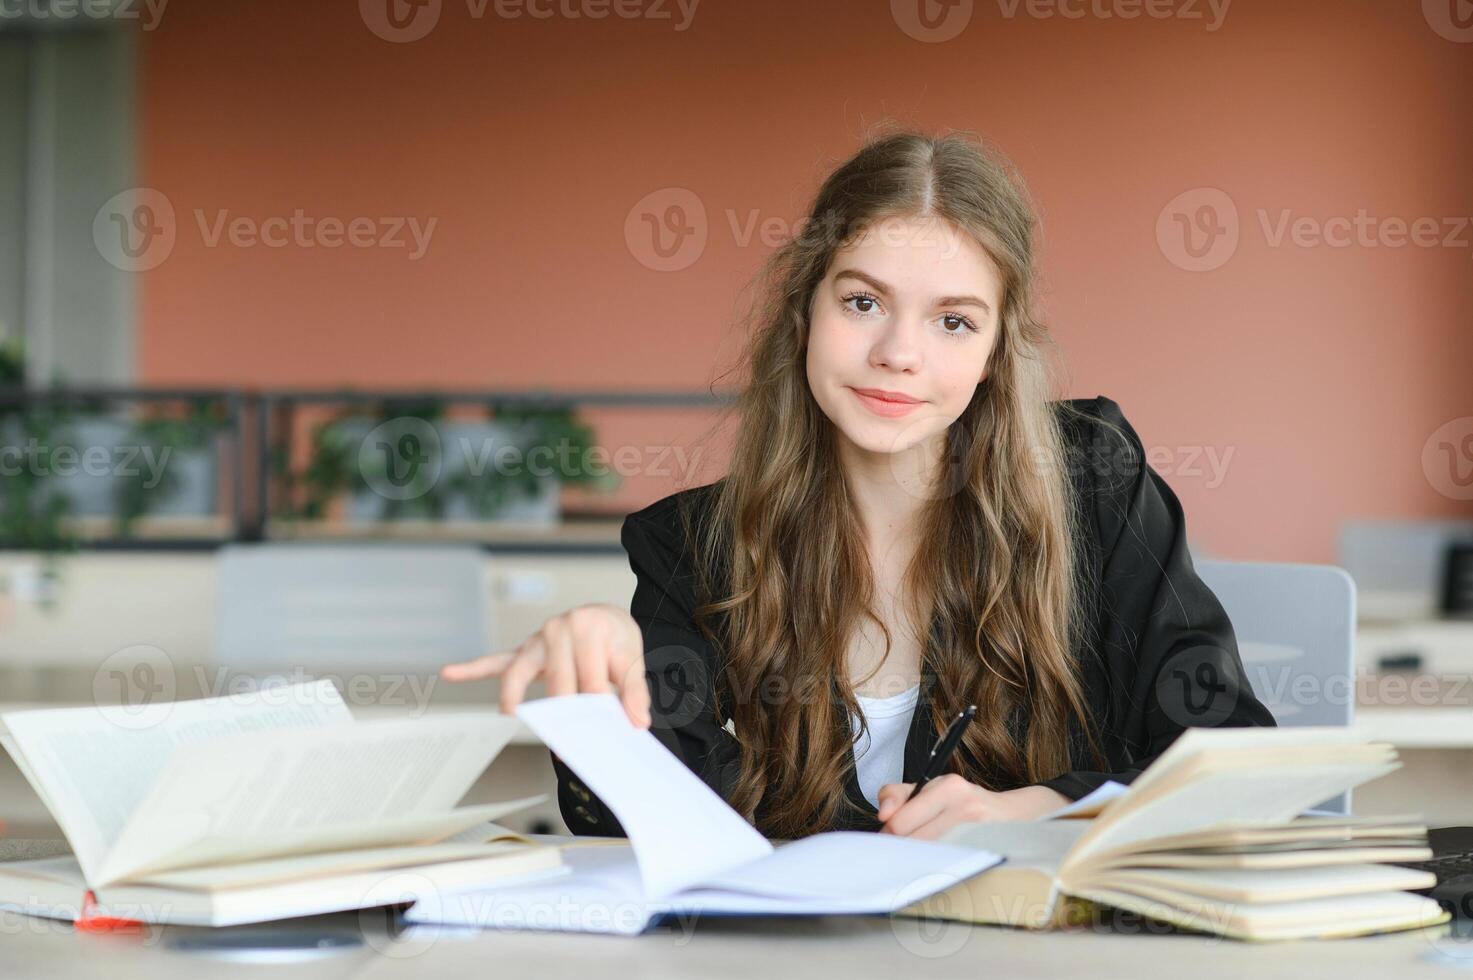 adolescente niña estudiando con libro de texto escritura ensayo aprendizaje en aula. foto